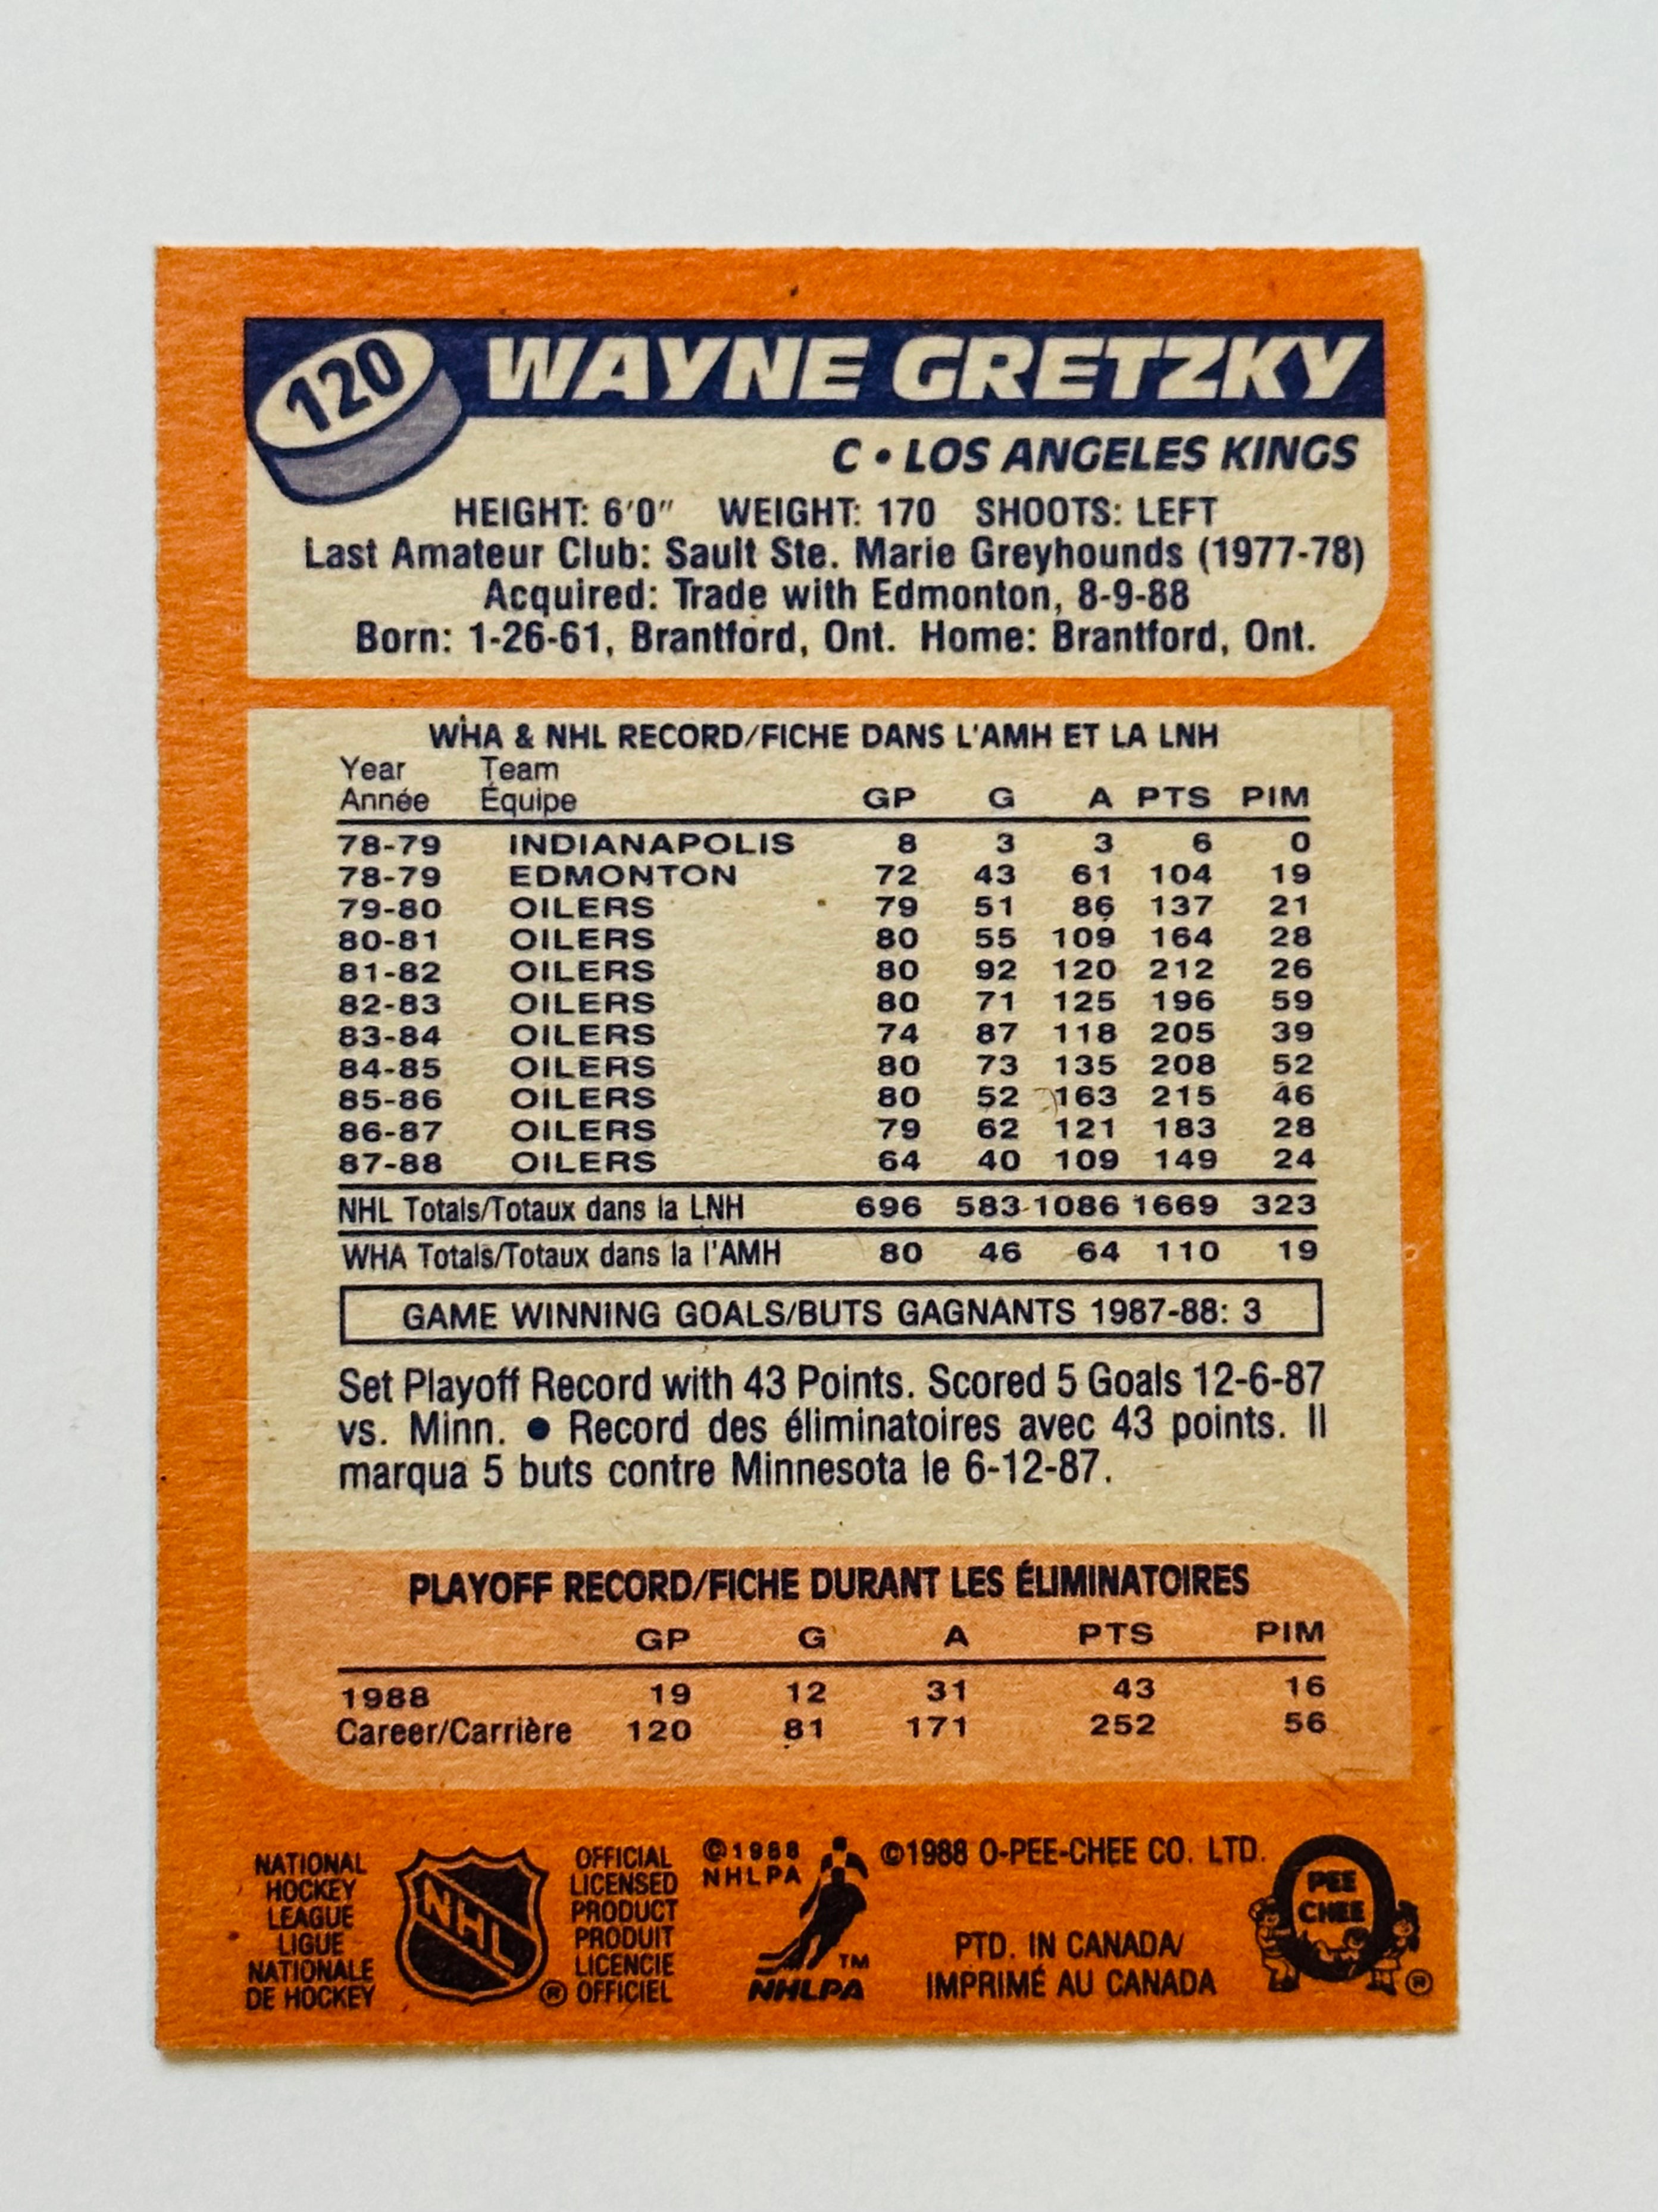 Wayne Gretzky amazing  opc high grade condition hockey card 1988-89